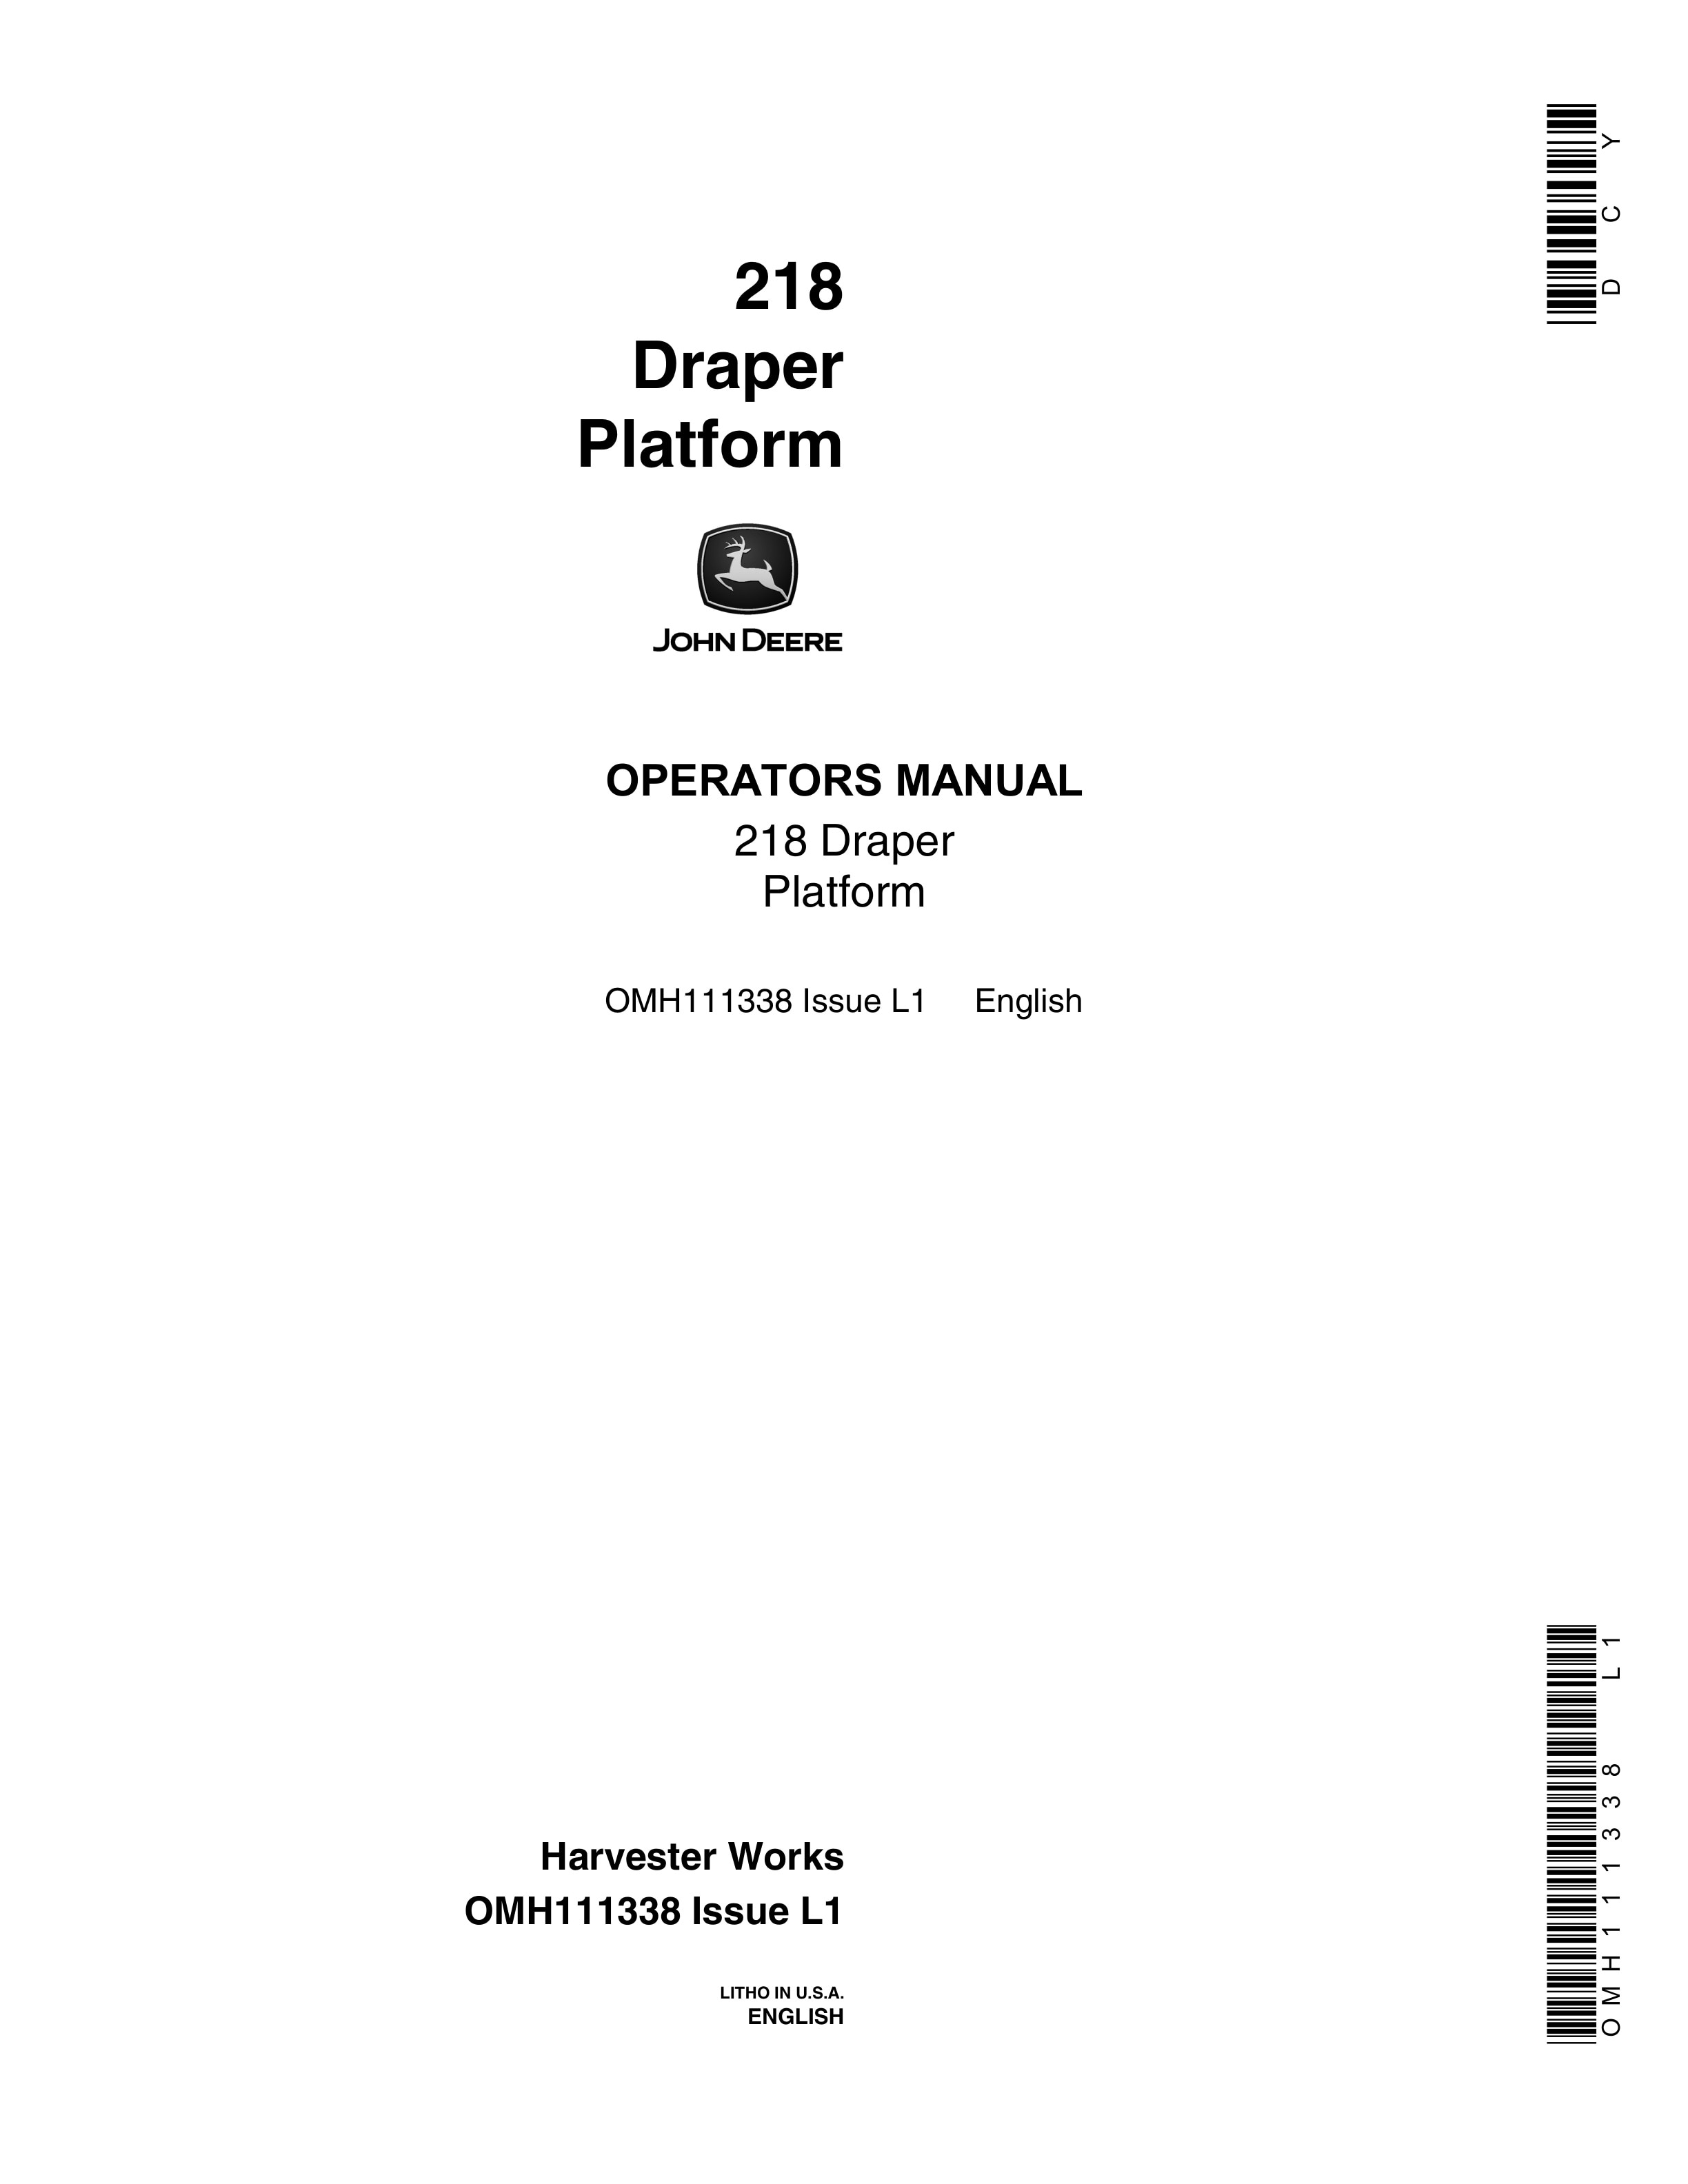 John Deere 218 Draper Platform Operator Manual OMH111338 1